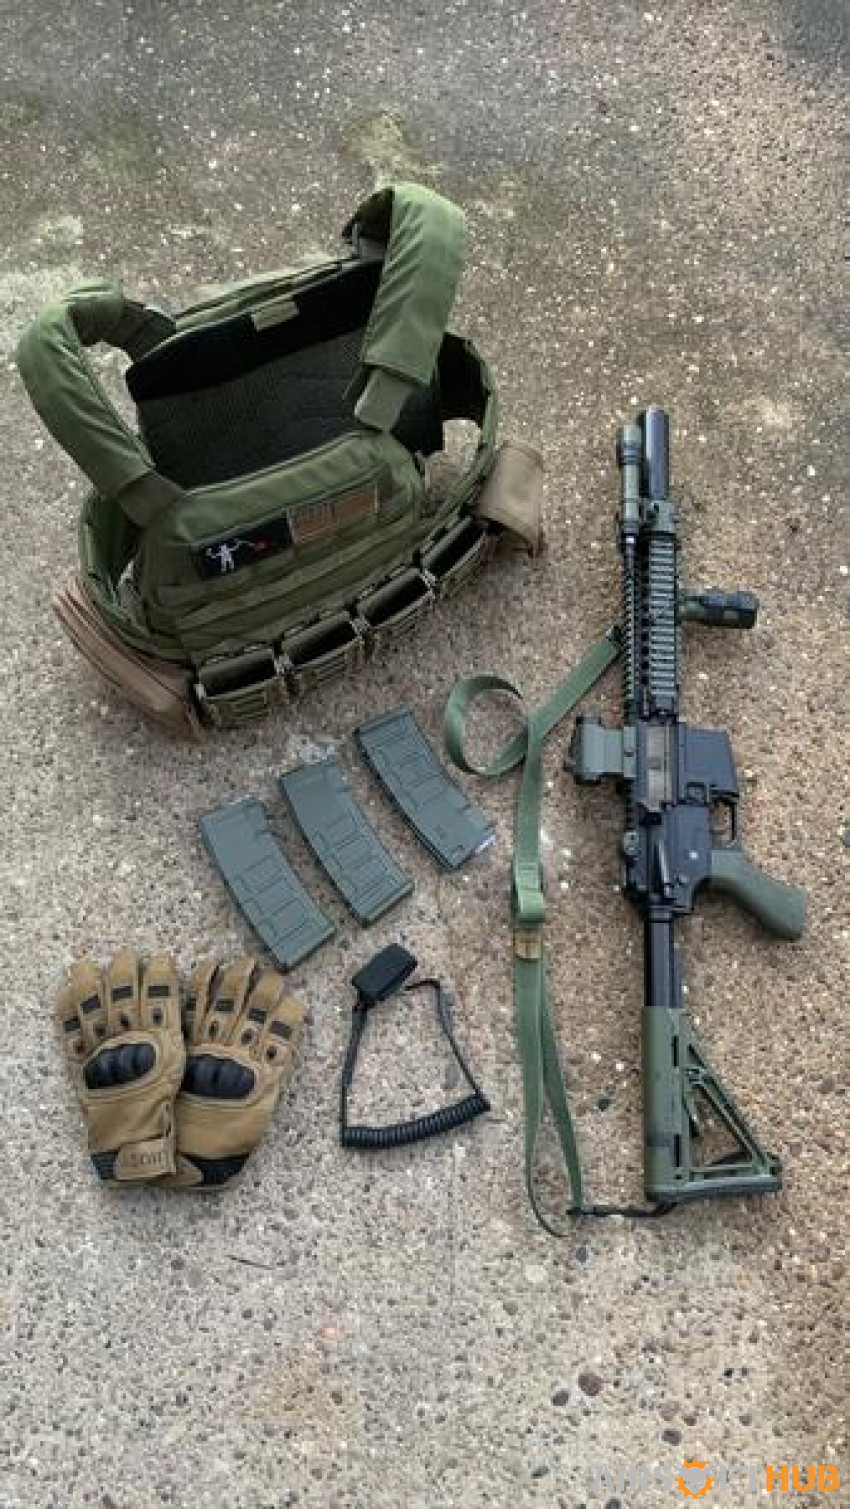 Specna MK18 & Warrior DCS - Used airsoft equipment